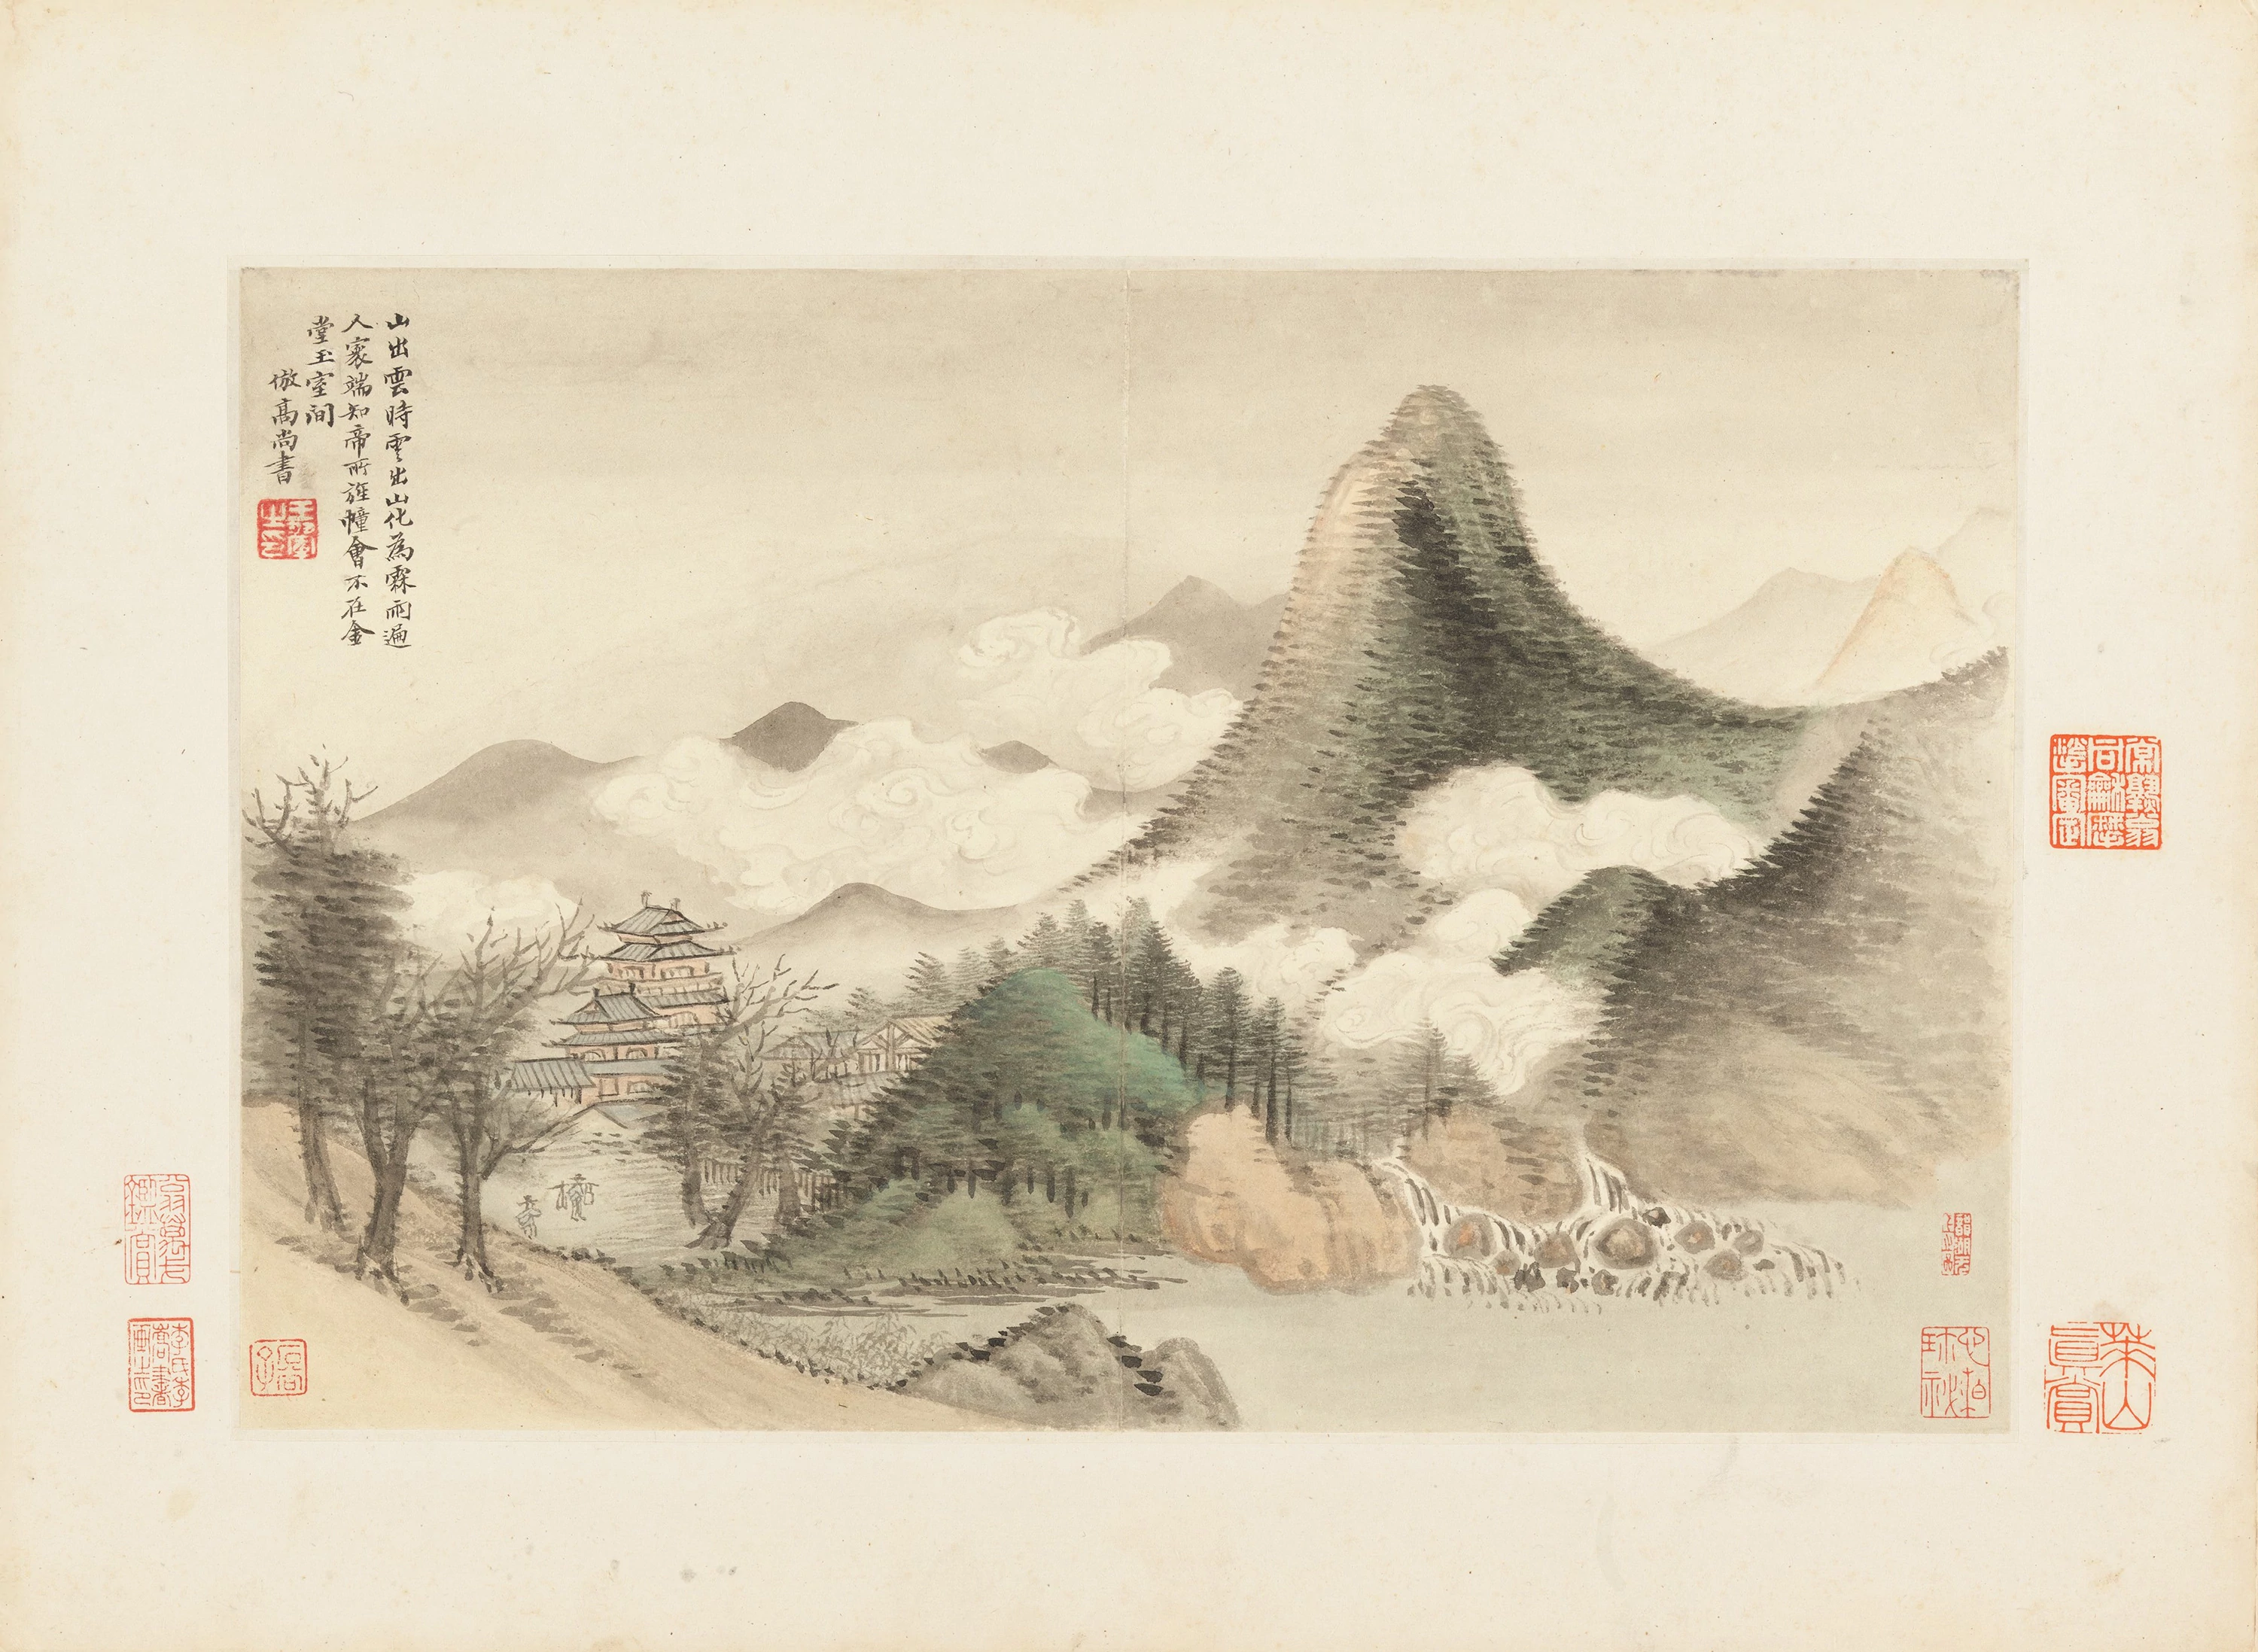 Landscapes 6, 仿古山水圖, Wang Hui (王翚)